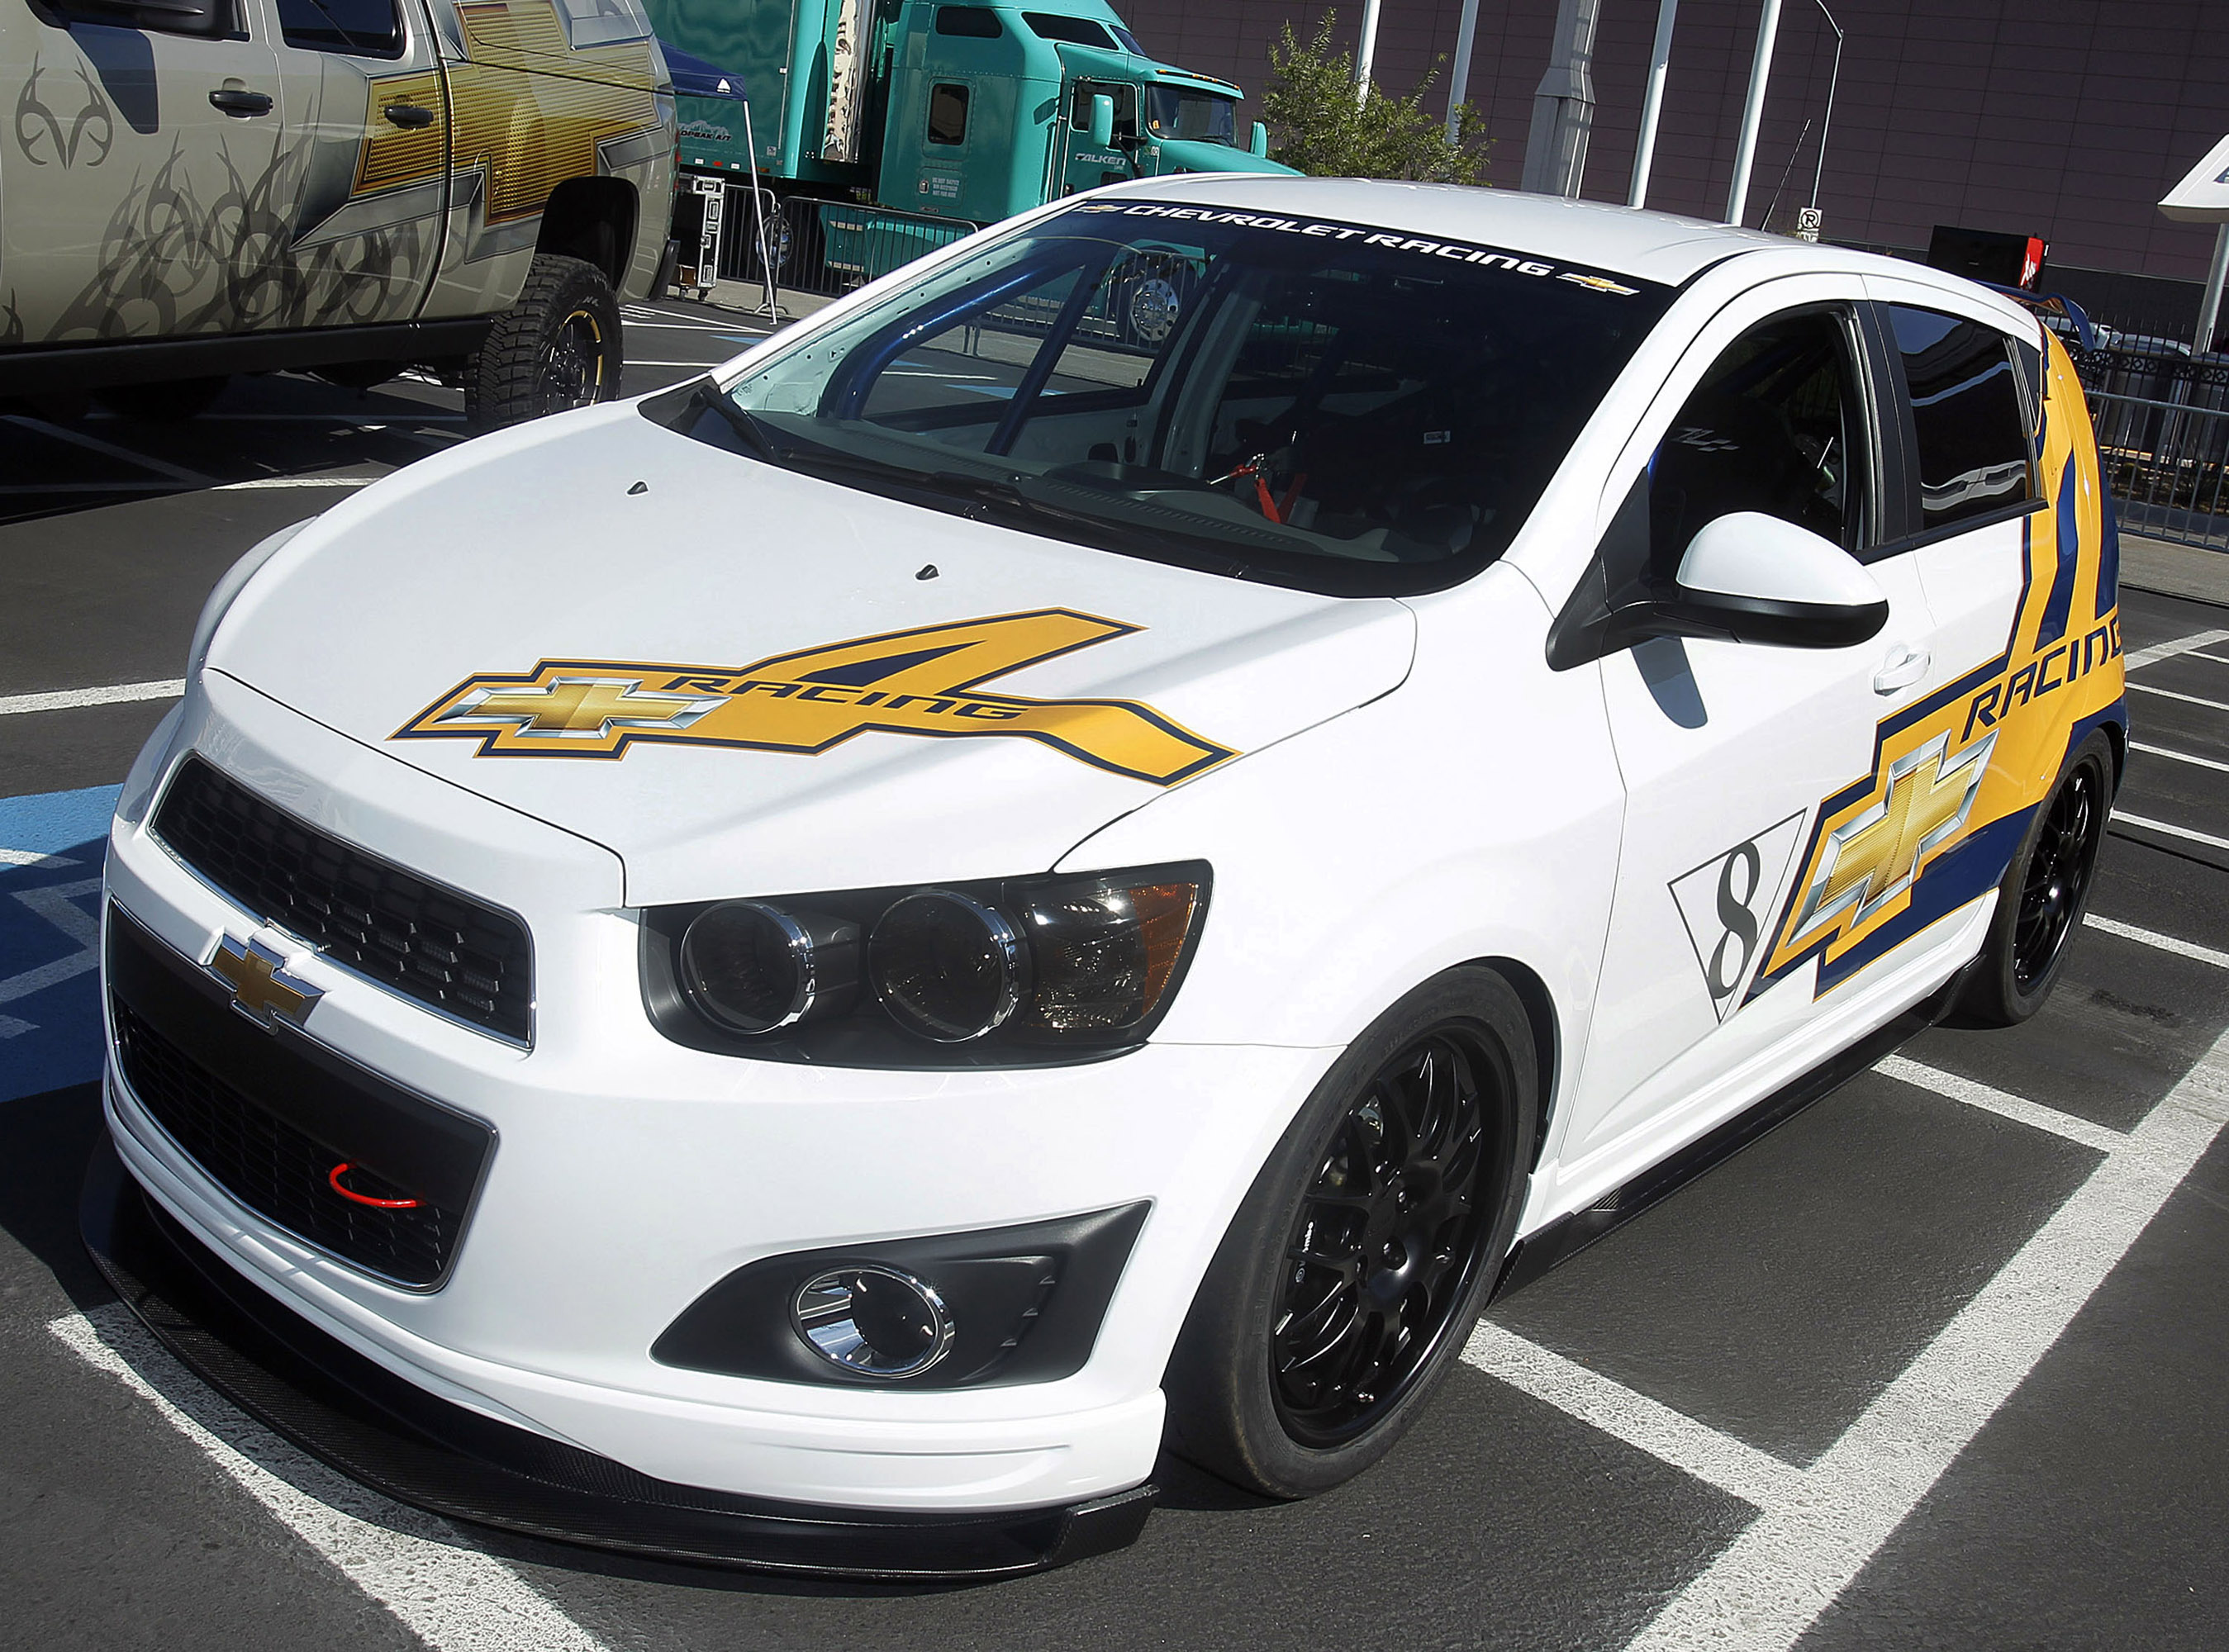 Chevrolet Sonic Super 4 Concept